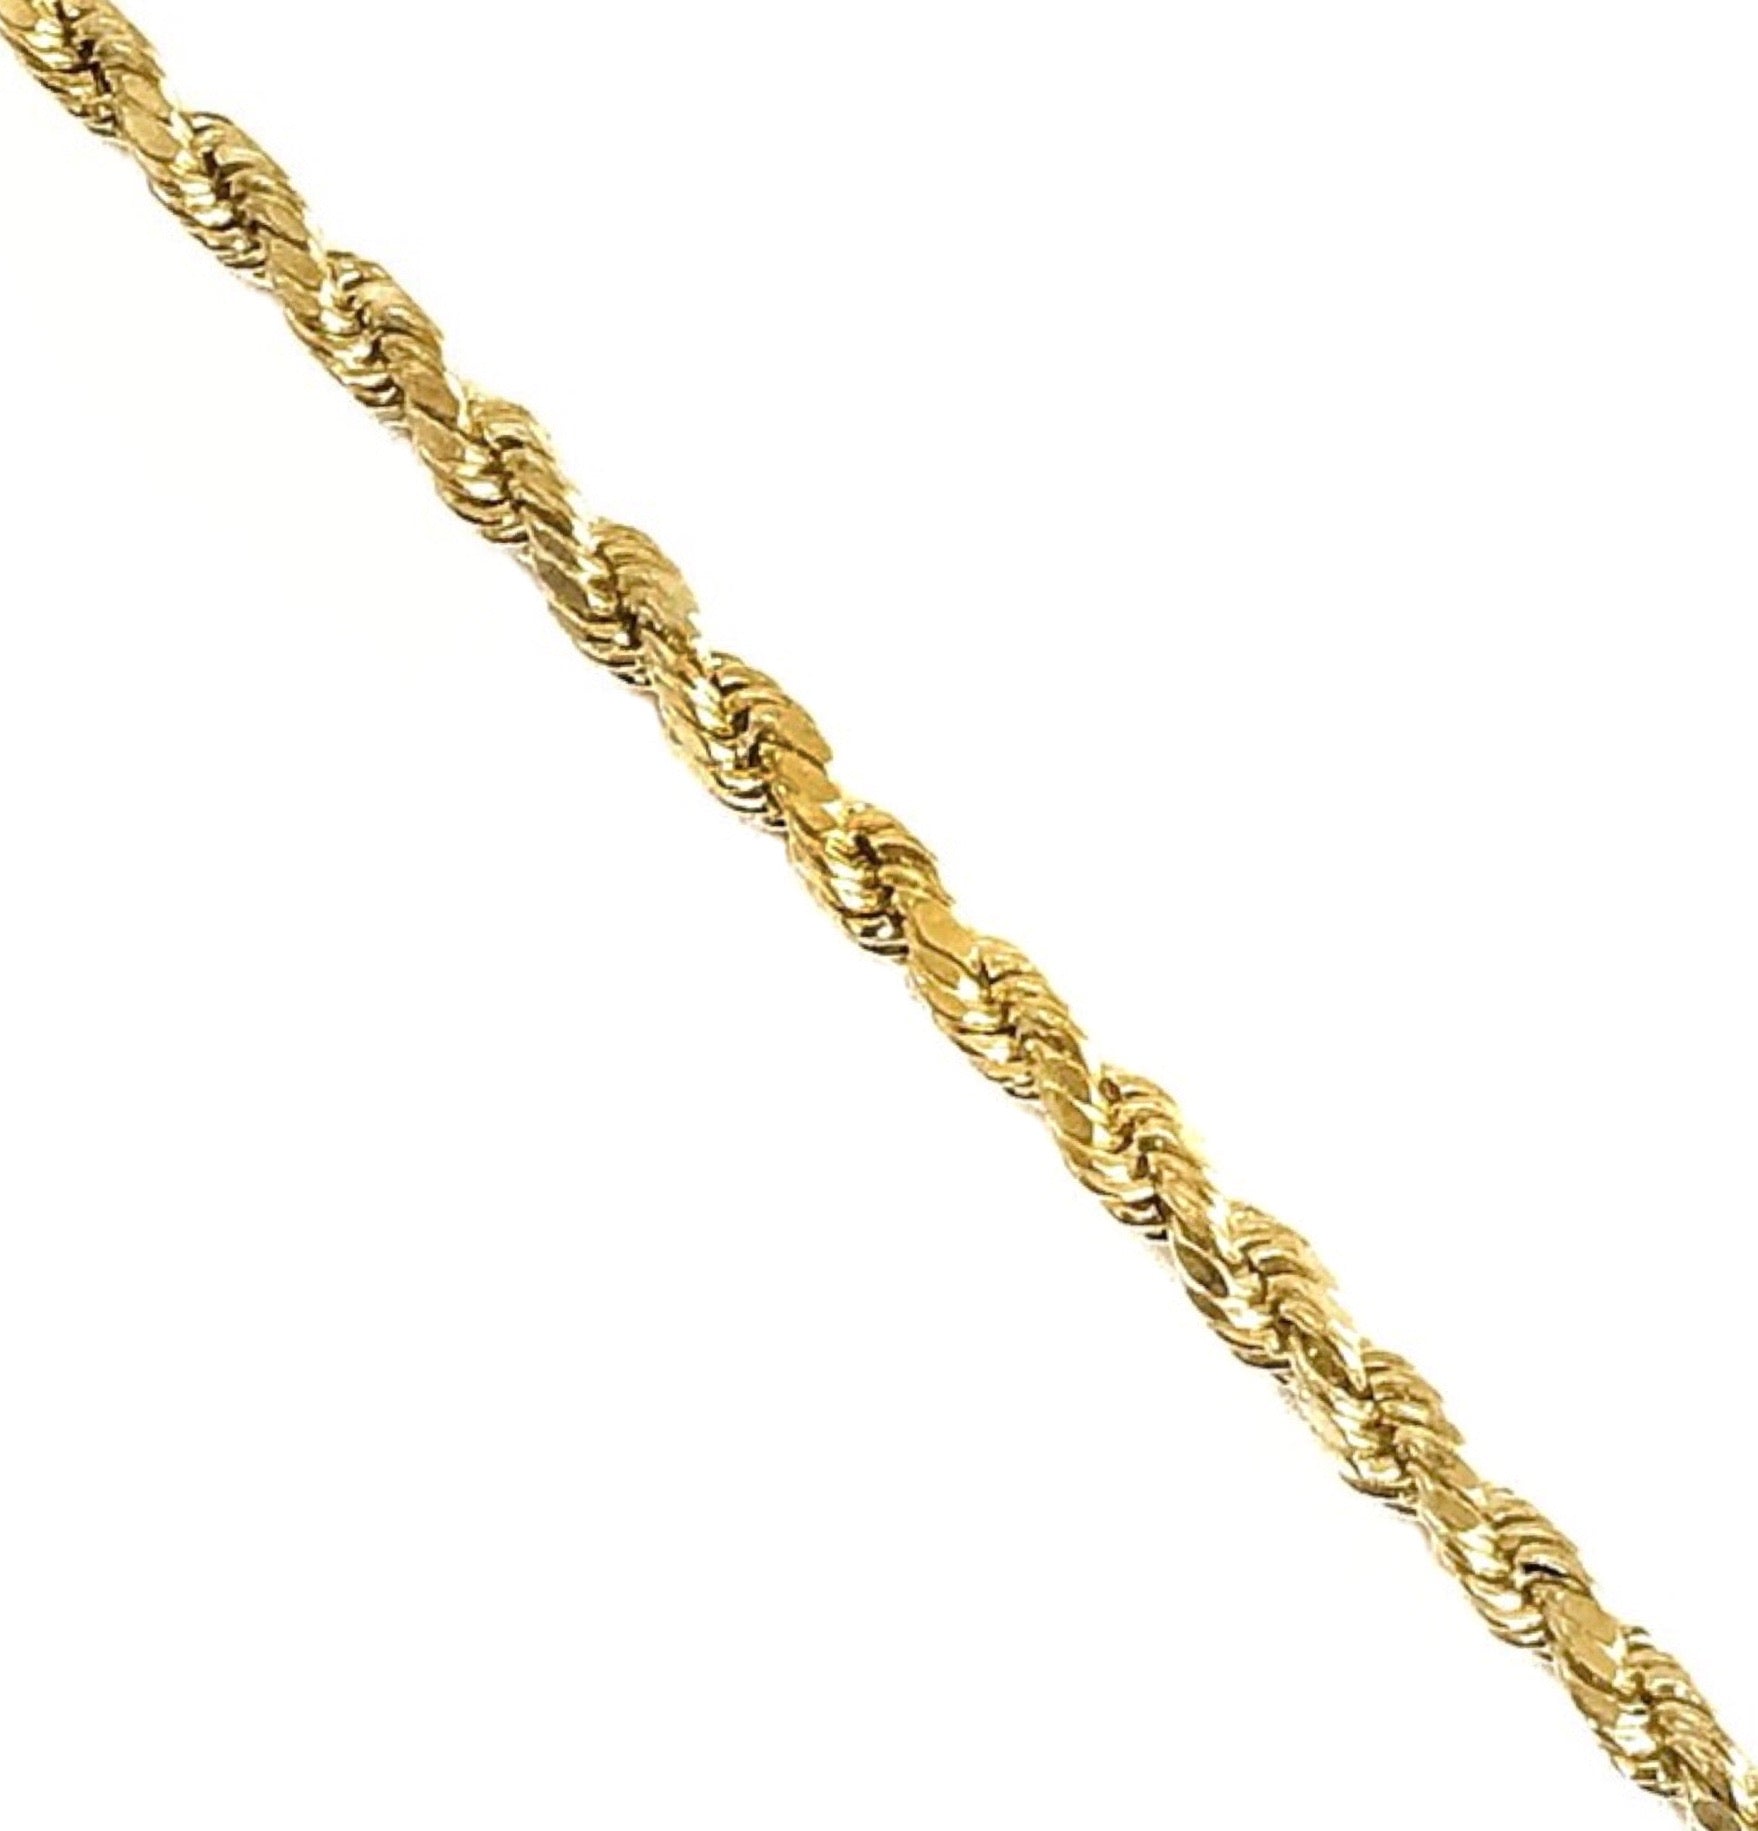 3mm Thick Rope Chain - Crislu 20 / 18kt Yellow Gold